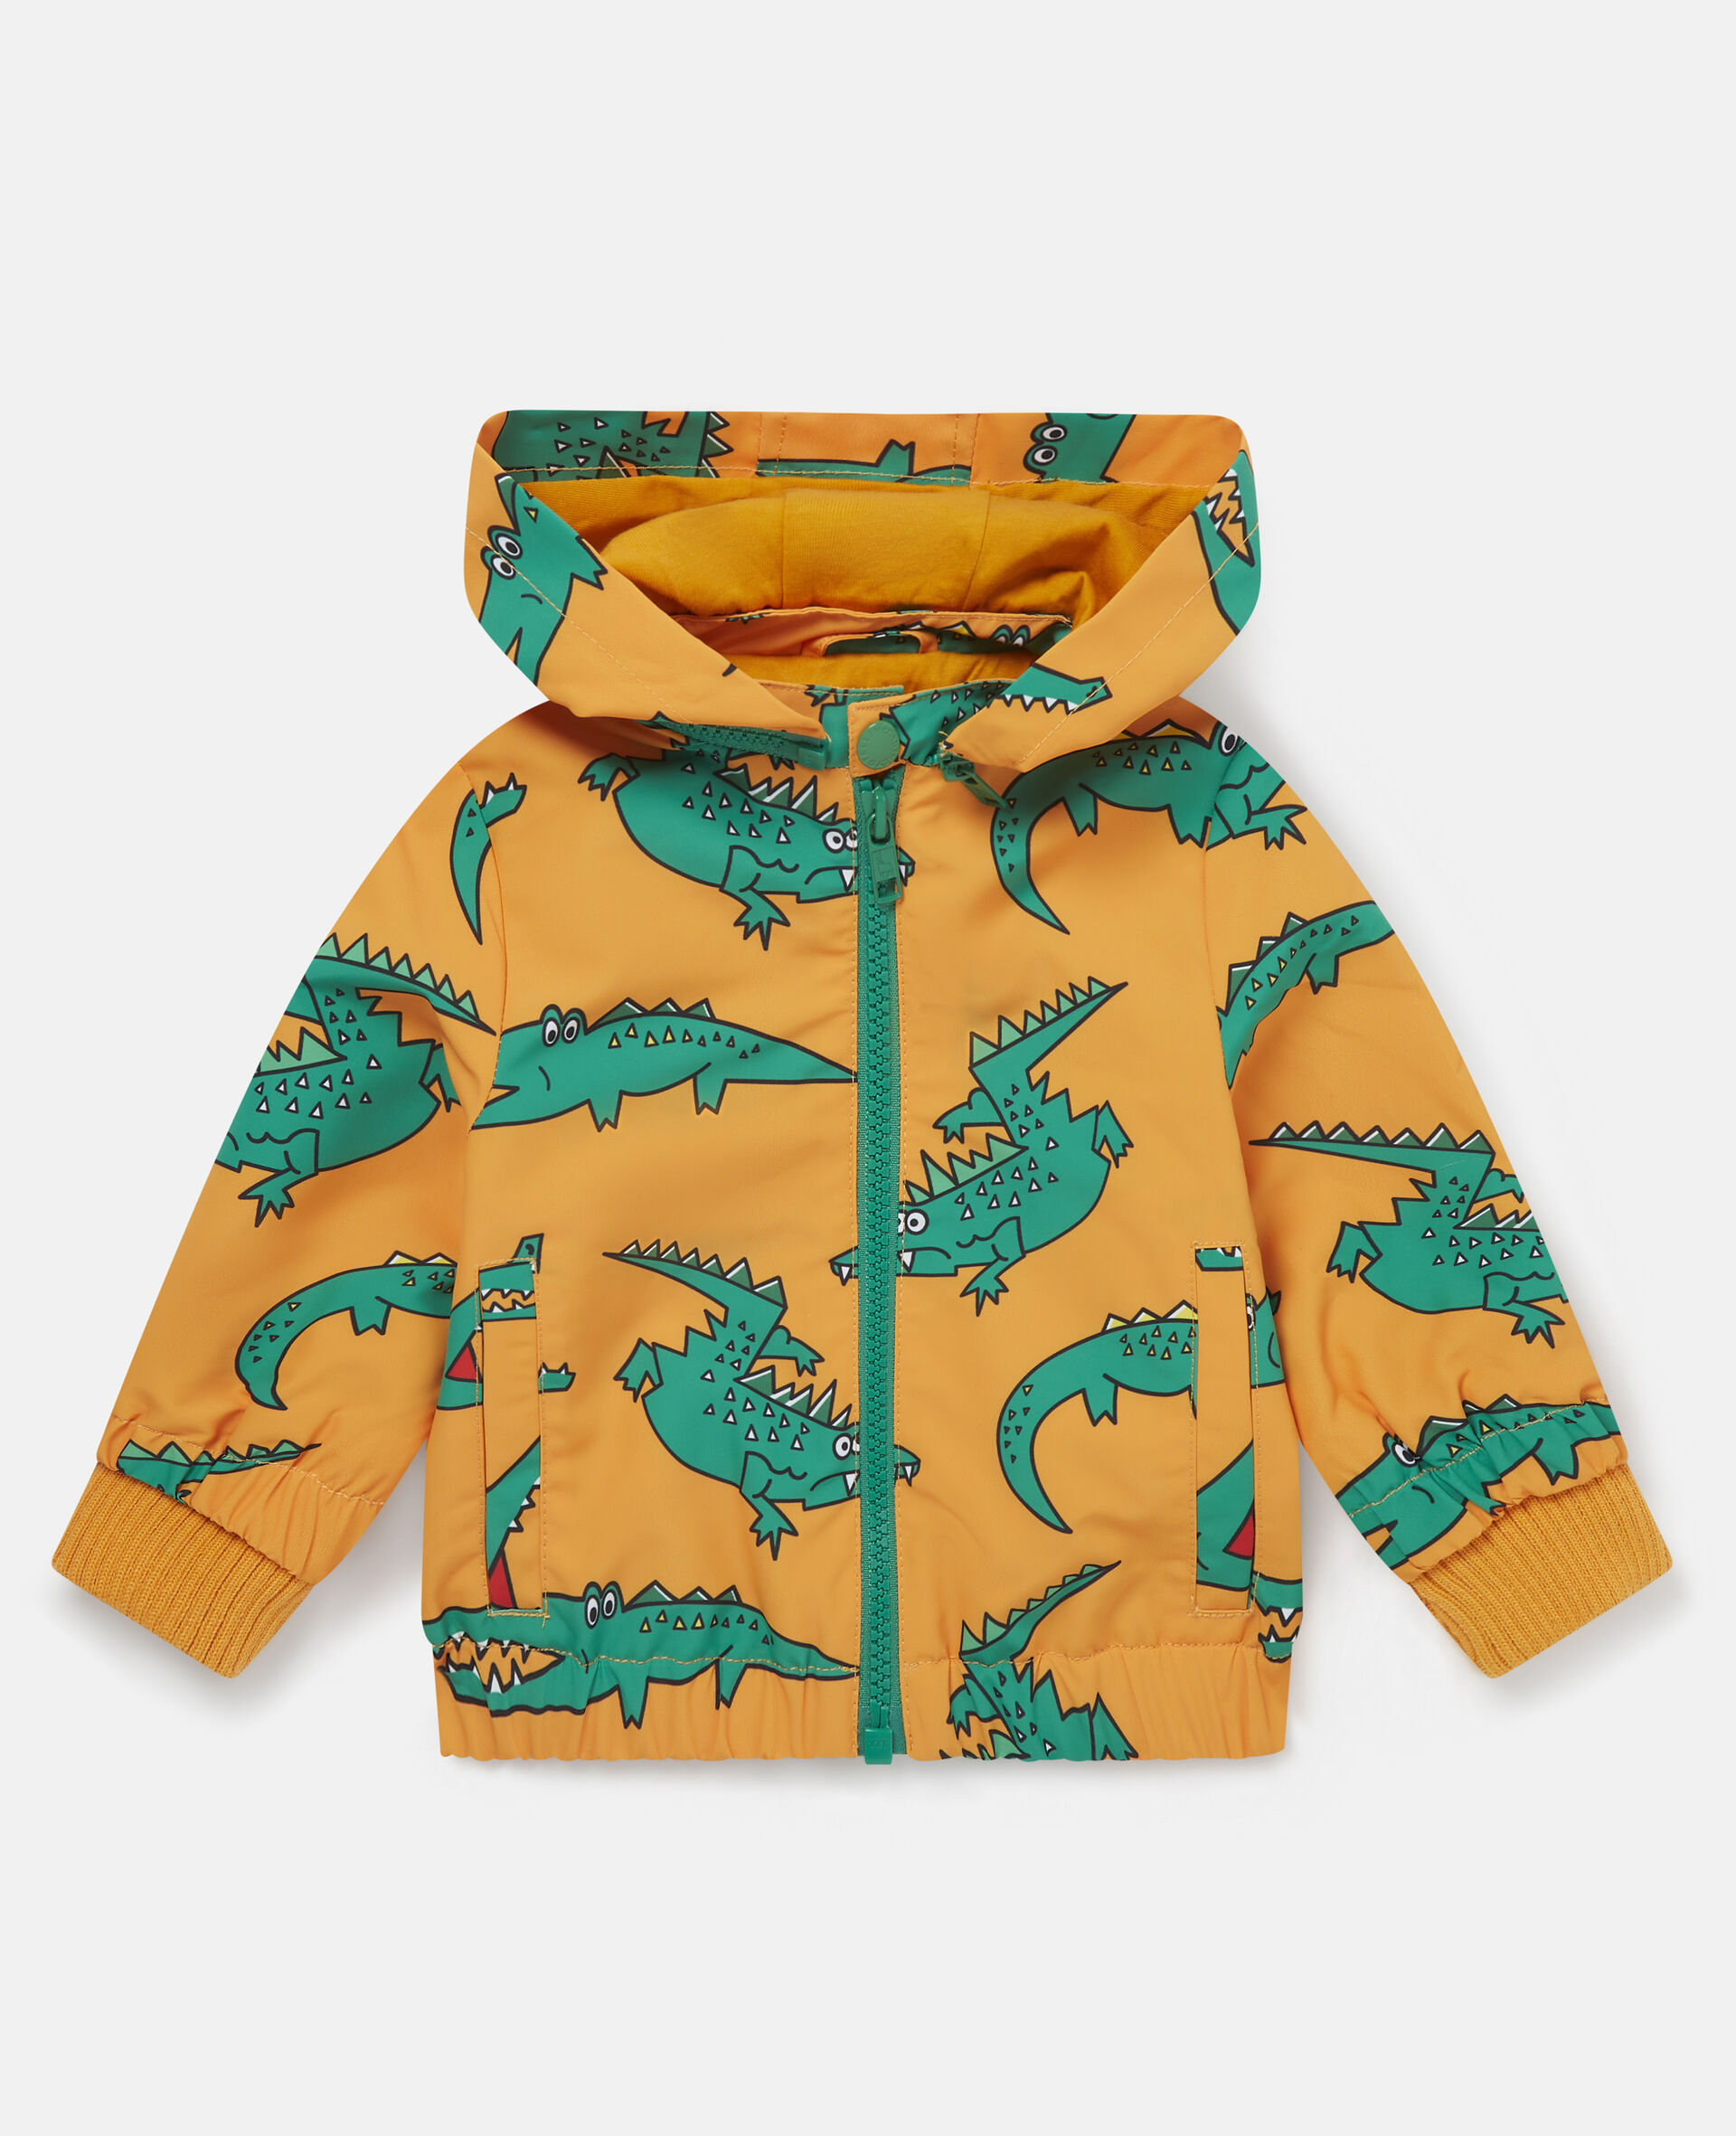 Crocodile Print All Over Jacket -Orange-large image number 0